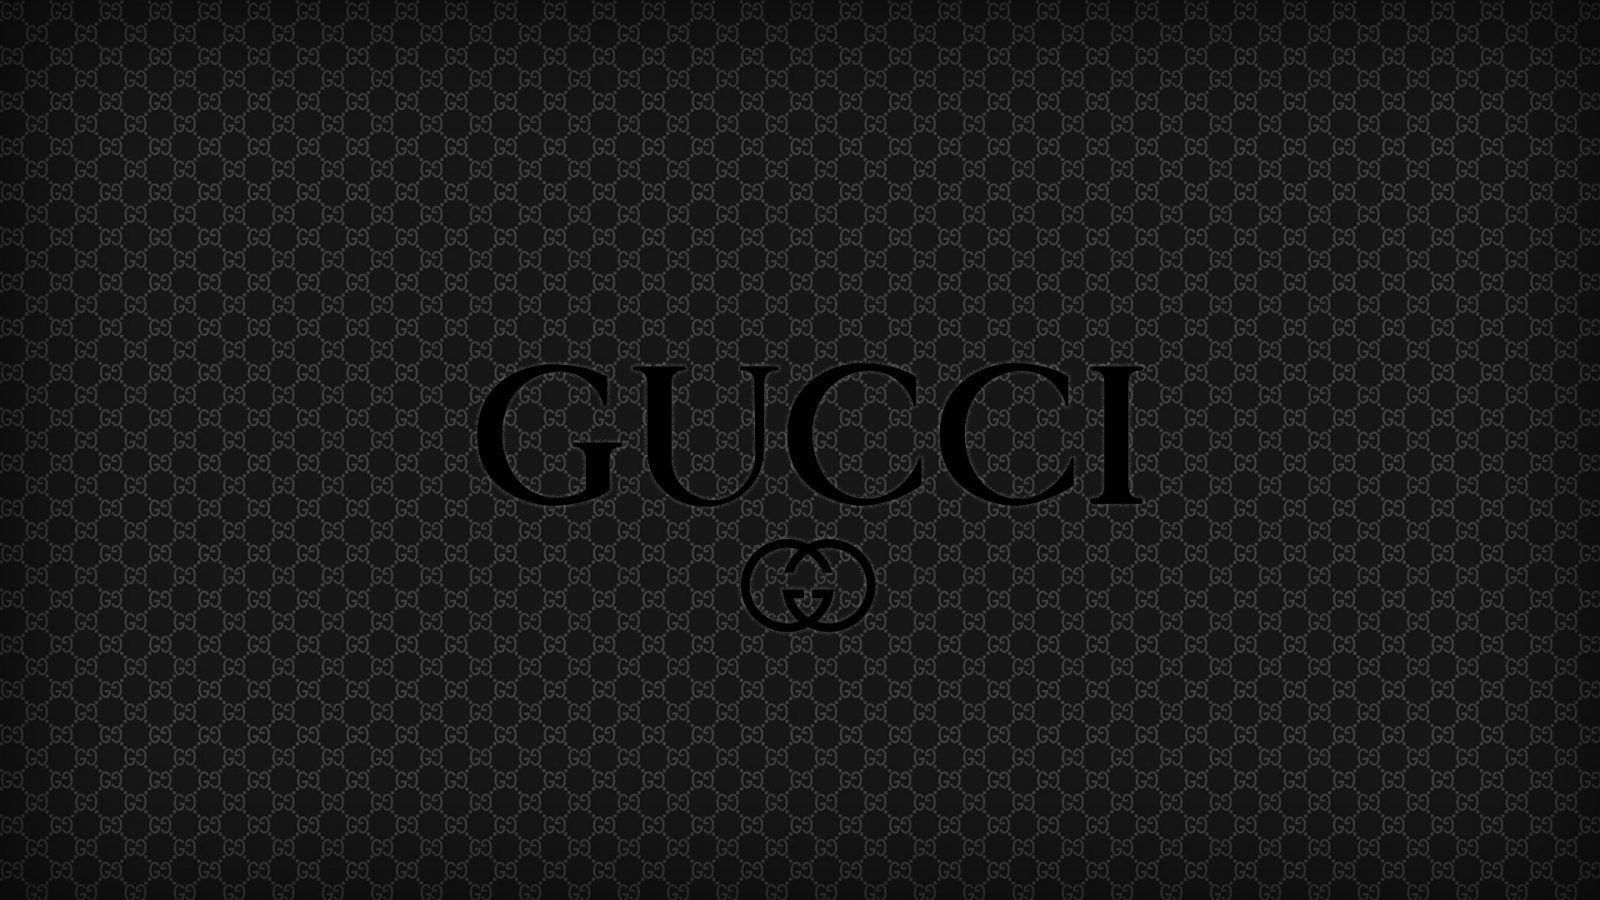 Gucci logo HD Wallpaper